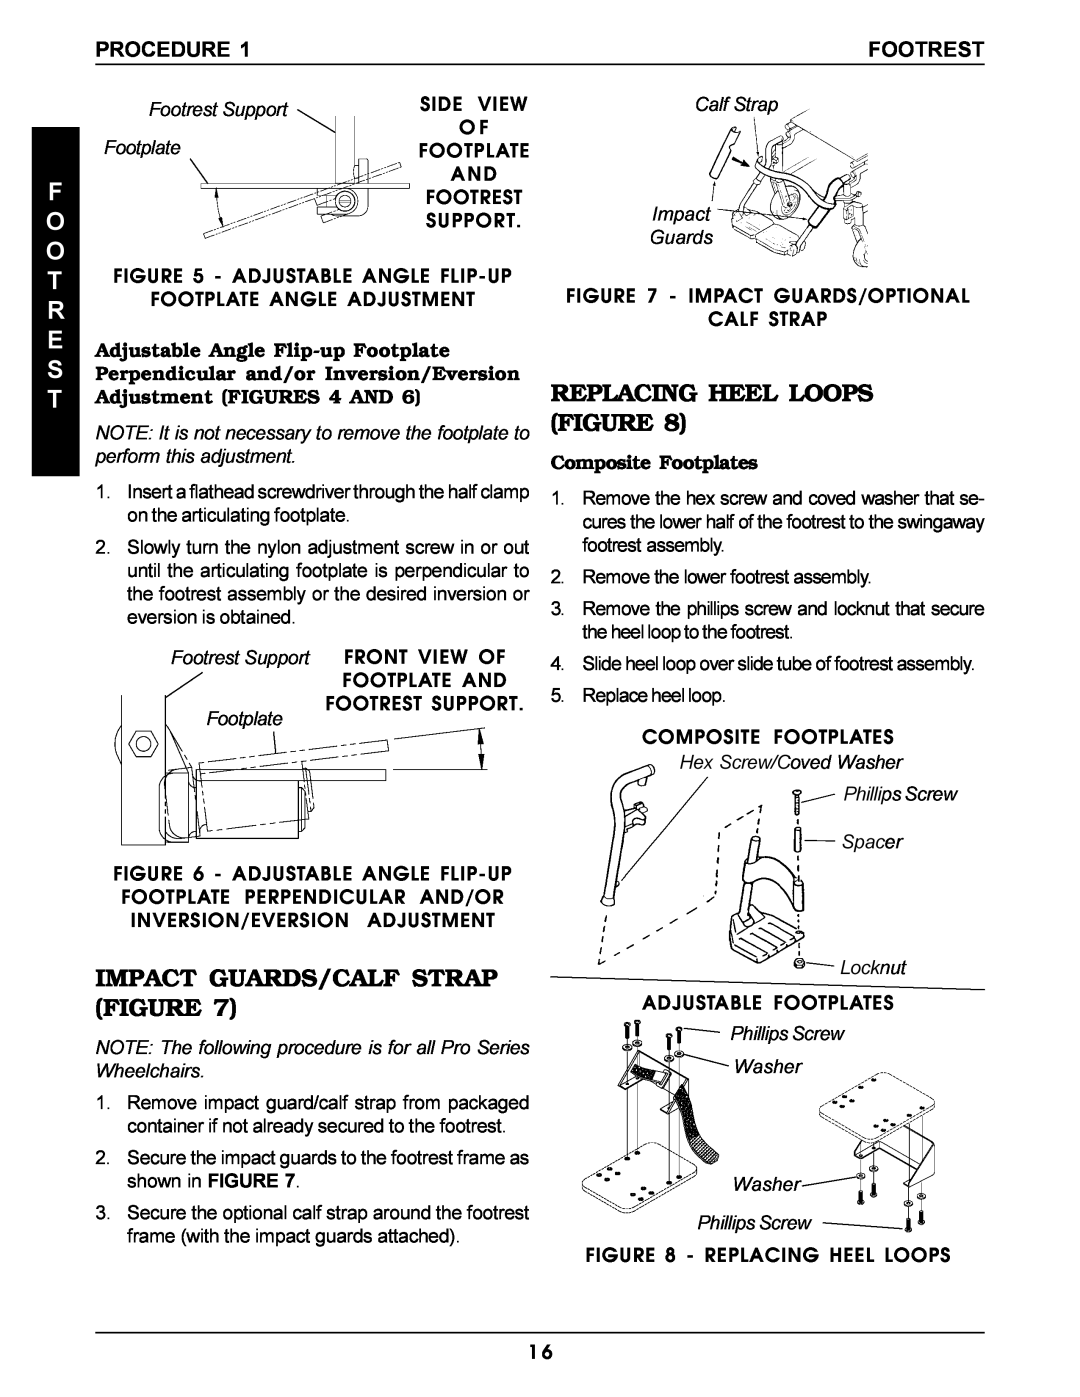 Invacare Pro Series Replacing Heel Loops Figure, Impact Guards/Calf Strap Figure, Composite Footplates, F O O T R E S T 